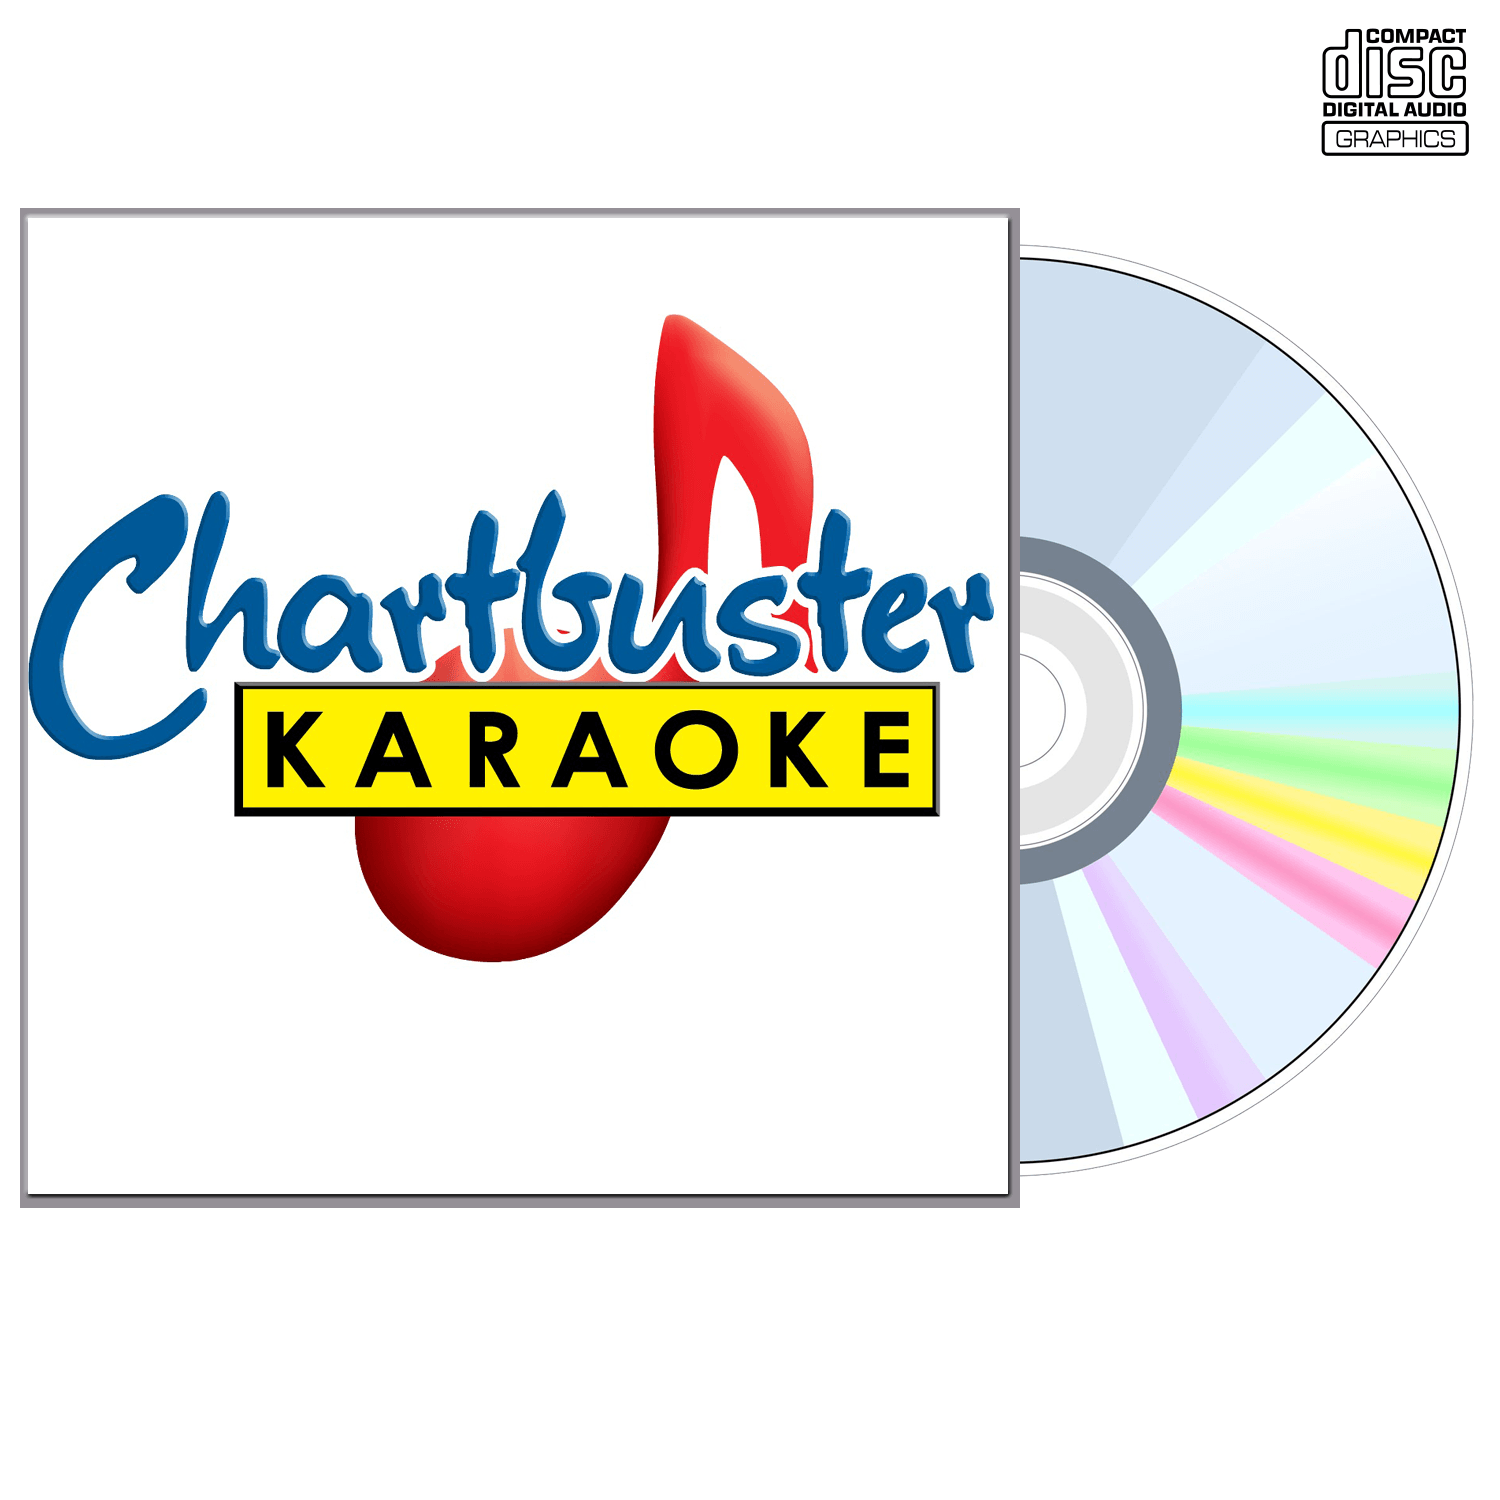 Dido - CD+G - Chartbuster Karaoke - Karaoke Home Entertainment